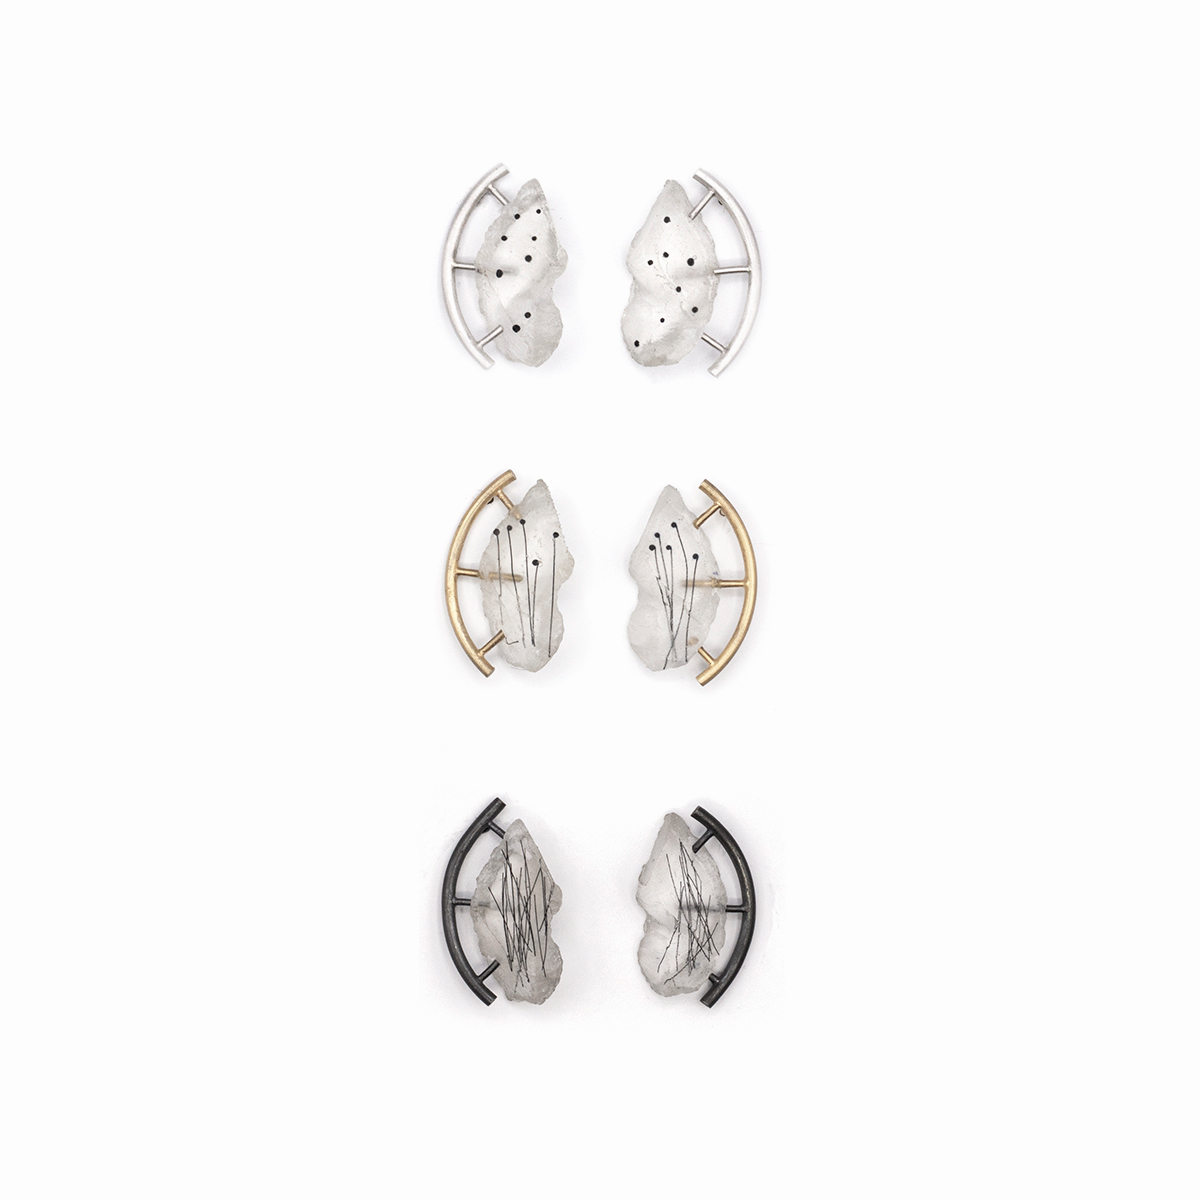 Meristema Lab, Annarita_Bianco,3020 graft, earrings, contemporary jewellery